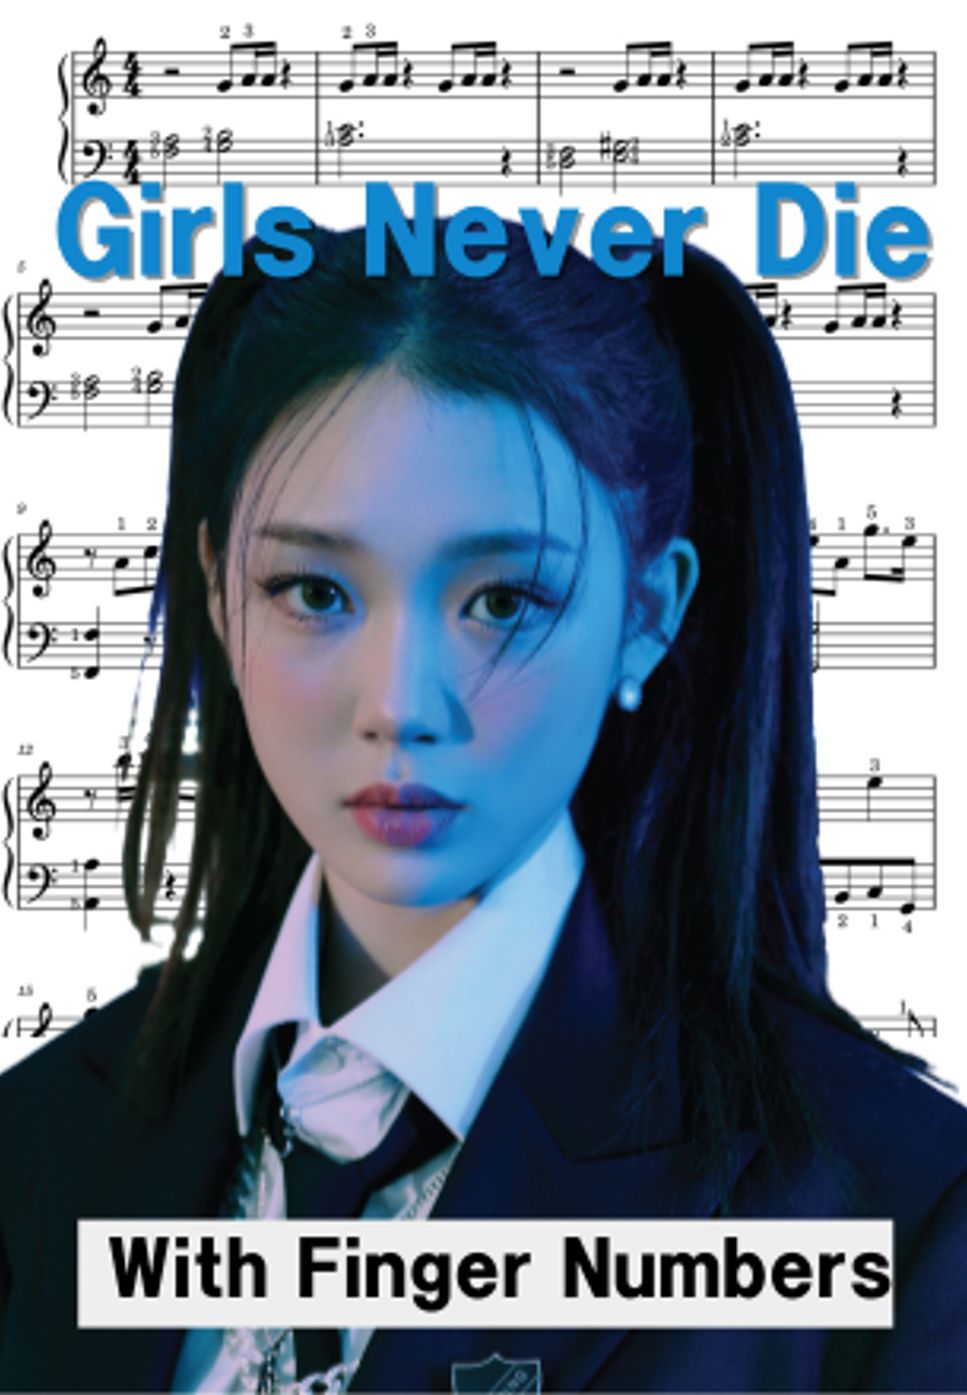 triple s - Girls Never Die (Easy Key(C Major), Finger Numbers) by K-Piano Vibes